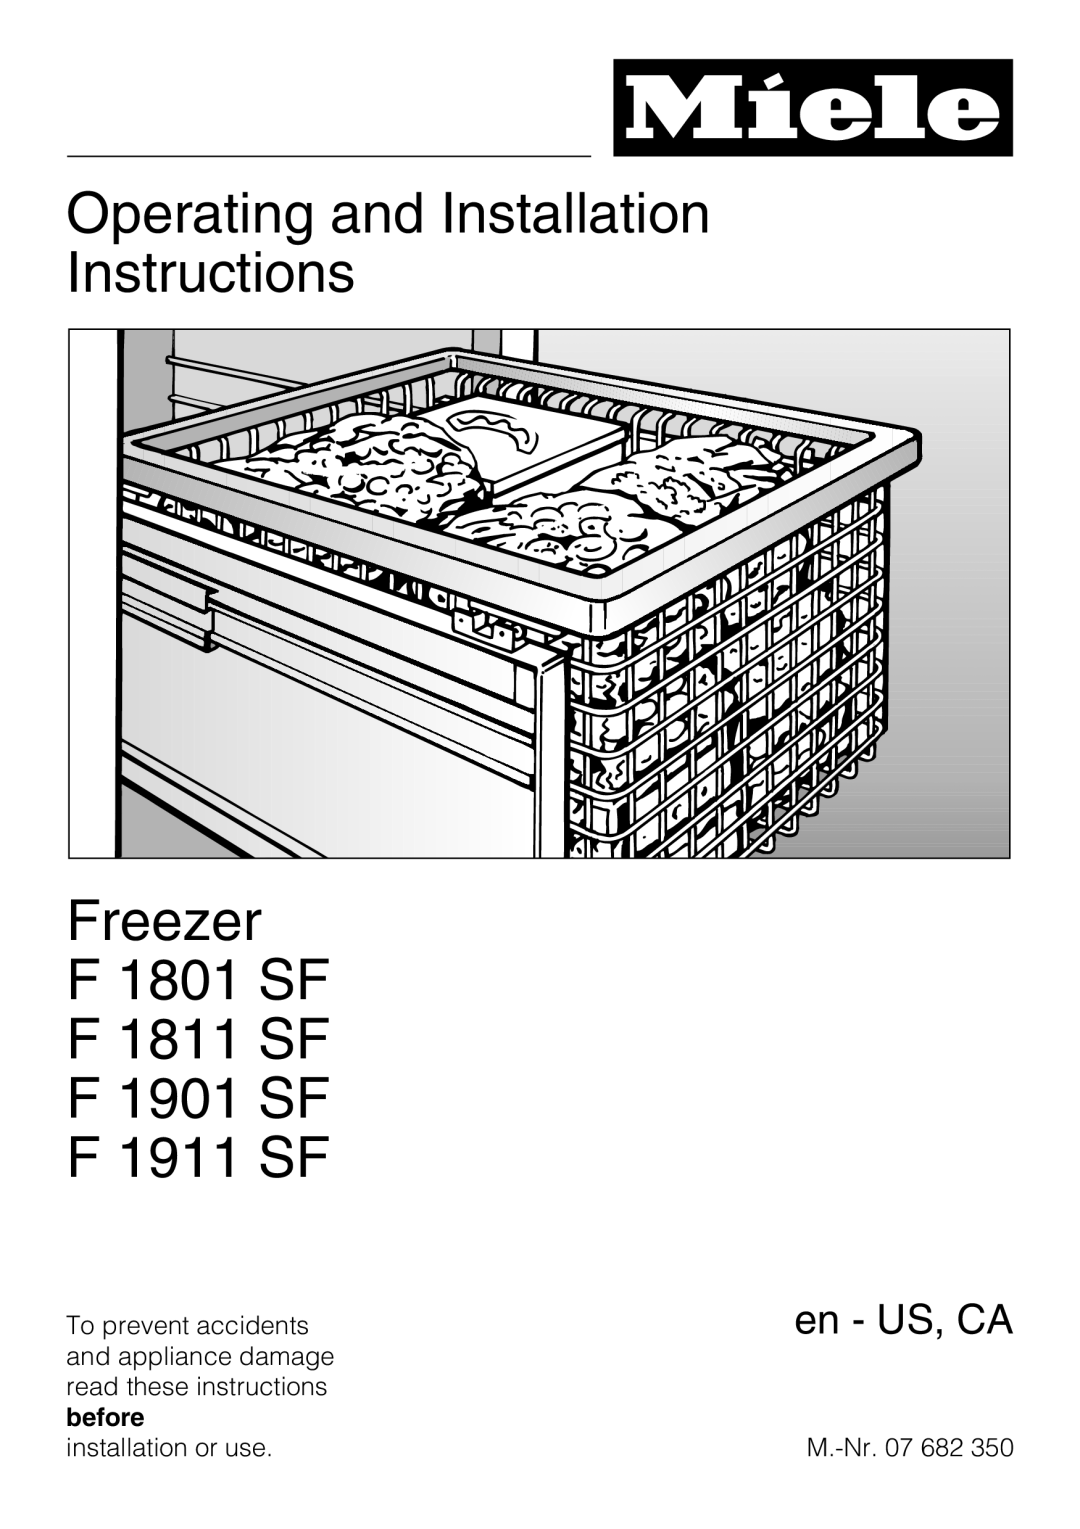 Miele F1911SF, F1801SF, F1811SF installation instructions Operating and Installation Instructions Freezer, en - US, CA 